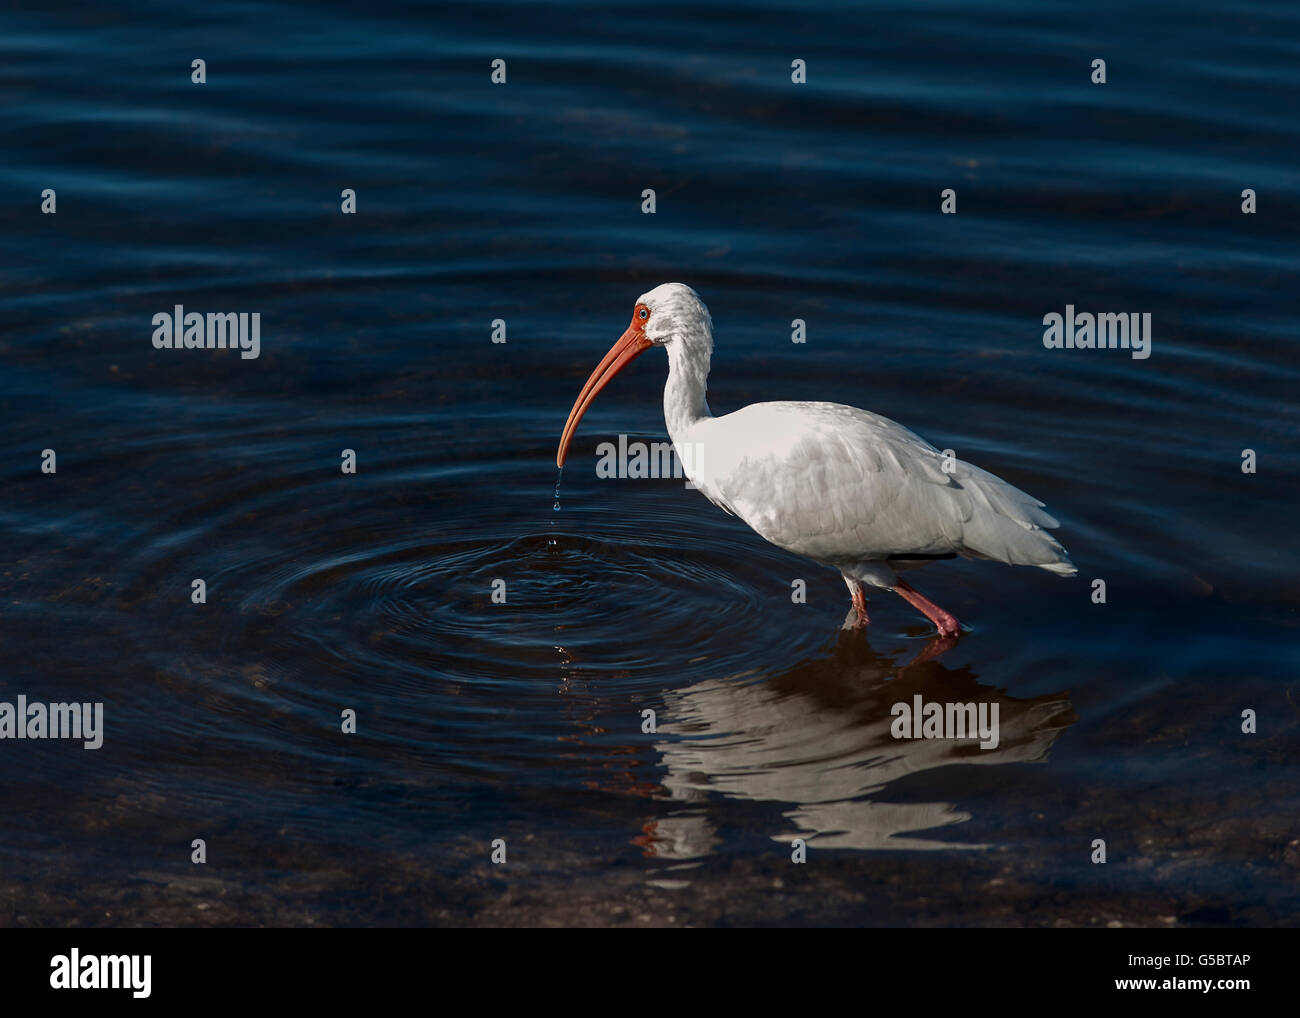 ibis walking in water with water drops falling from beak Stock Photo